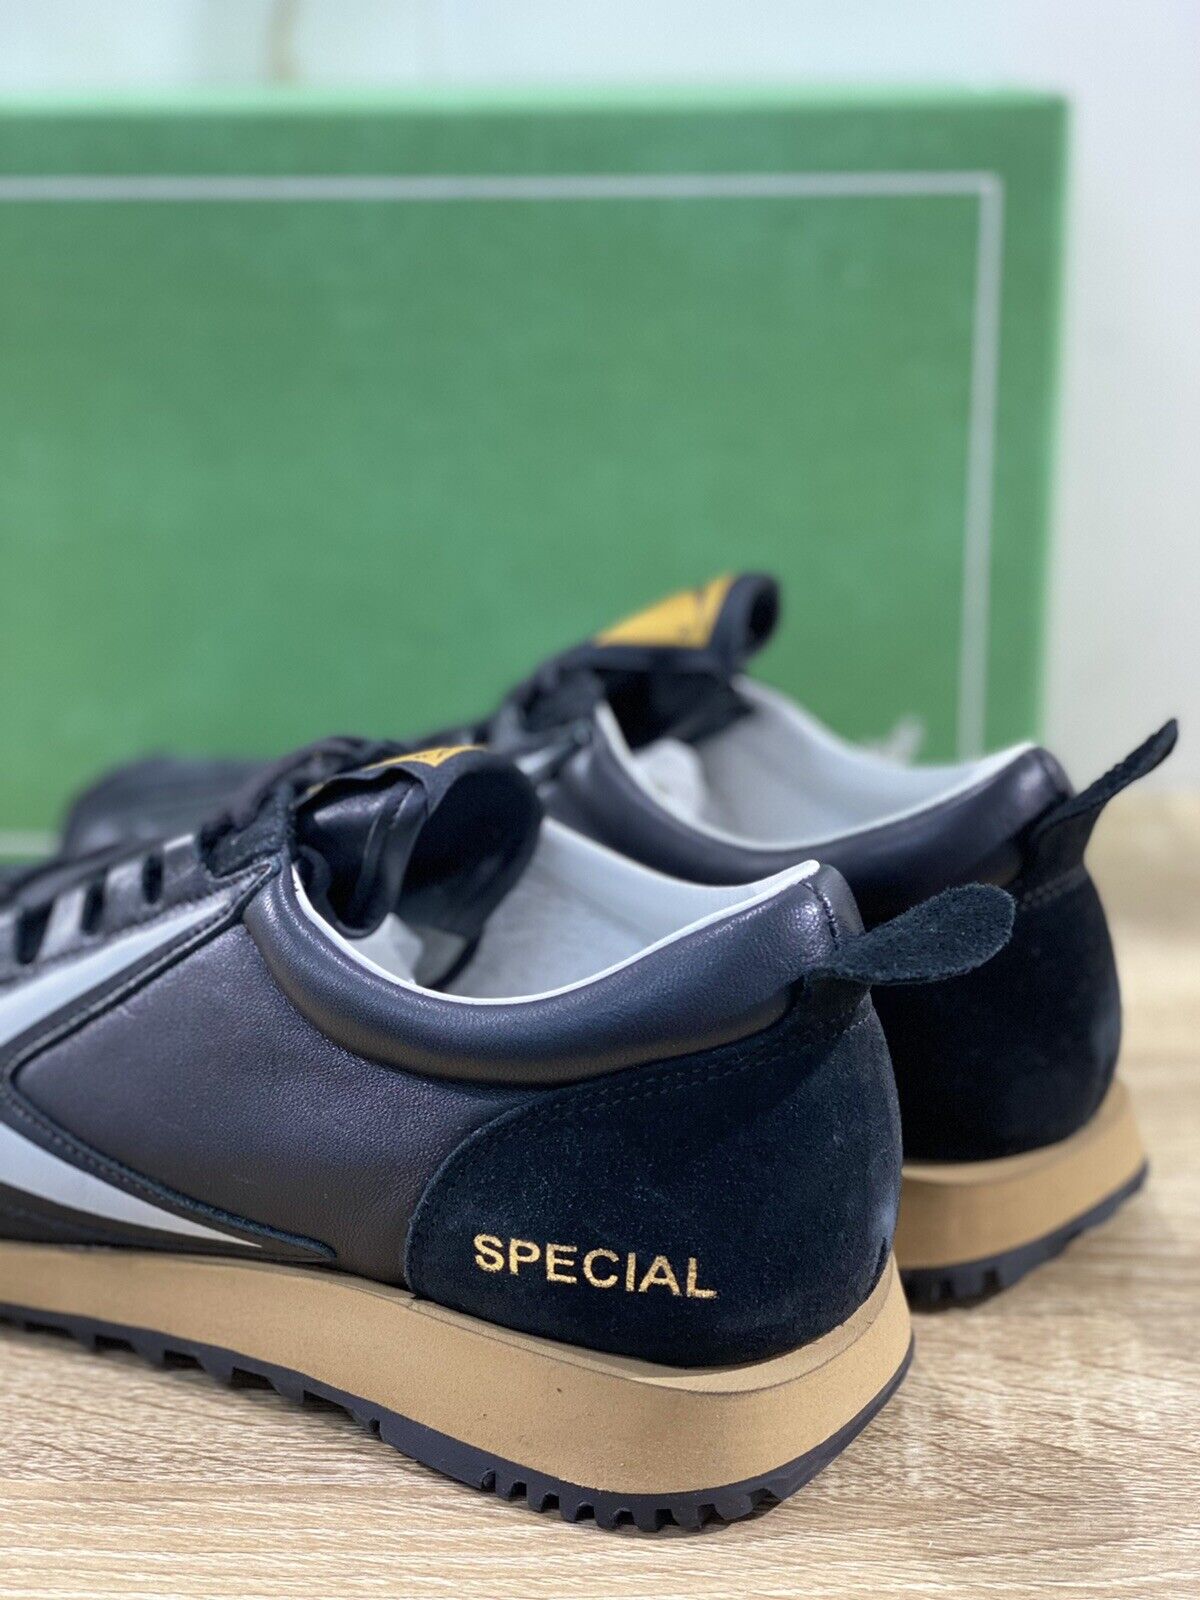 Valsport scarpa uomo sneaker special in pelle nera luxury made in italy 40